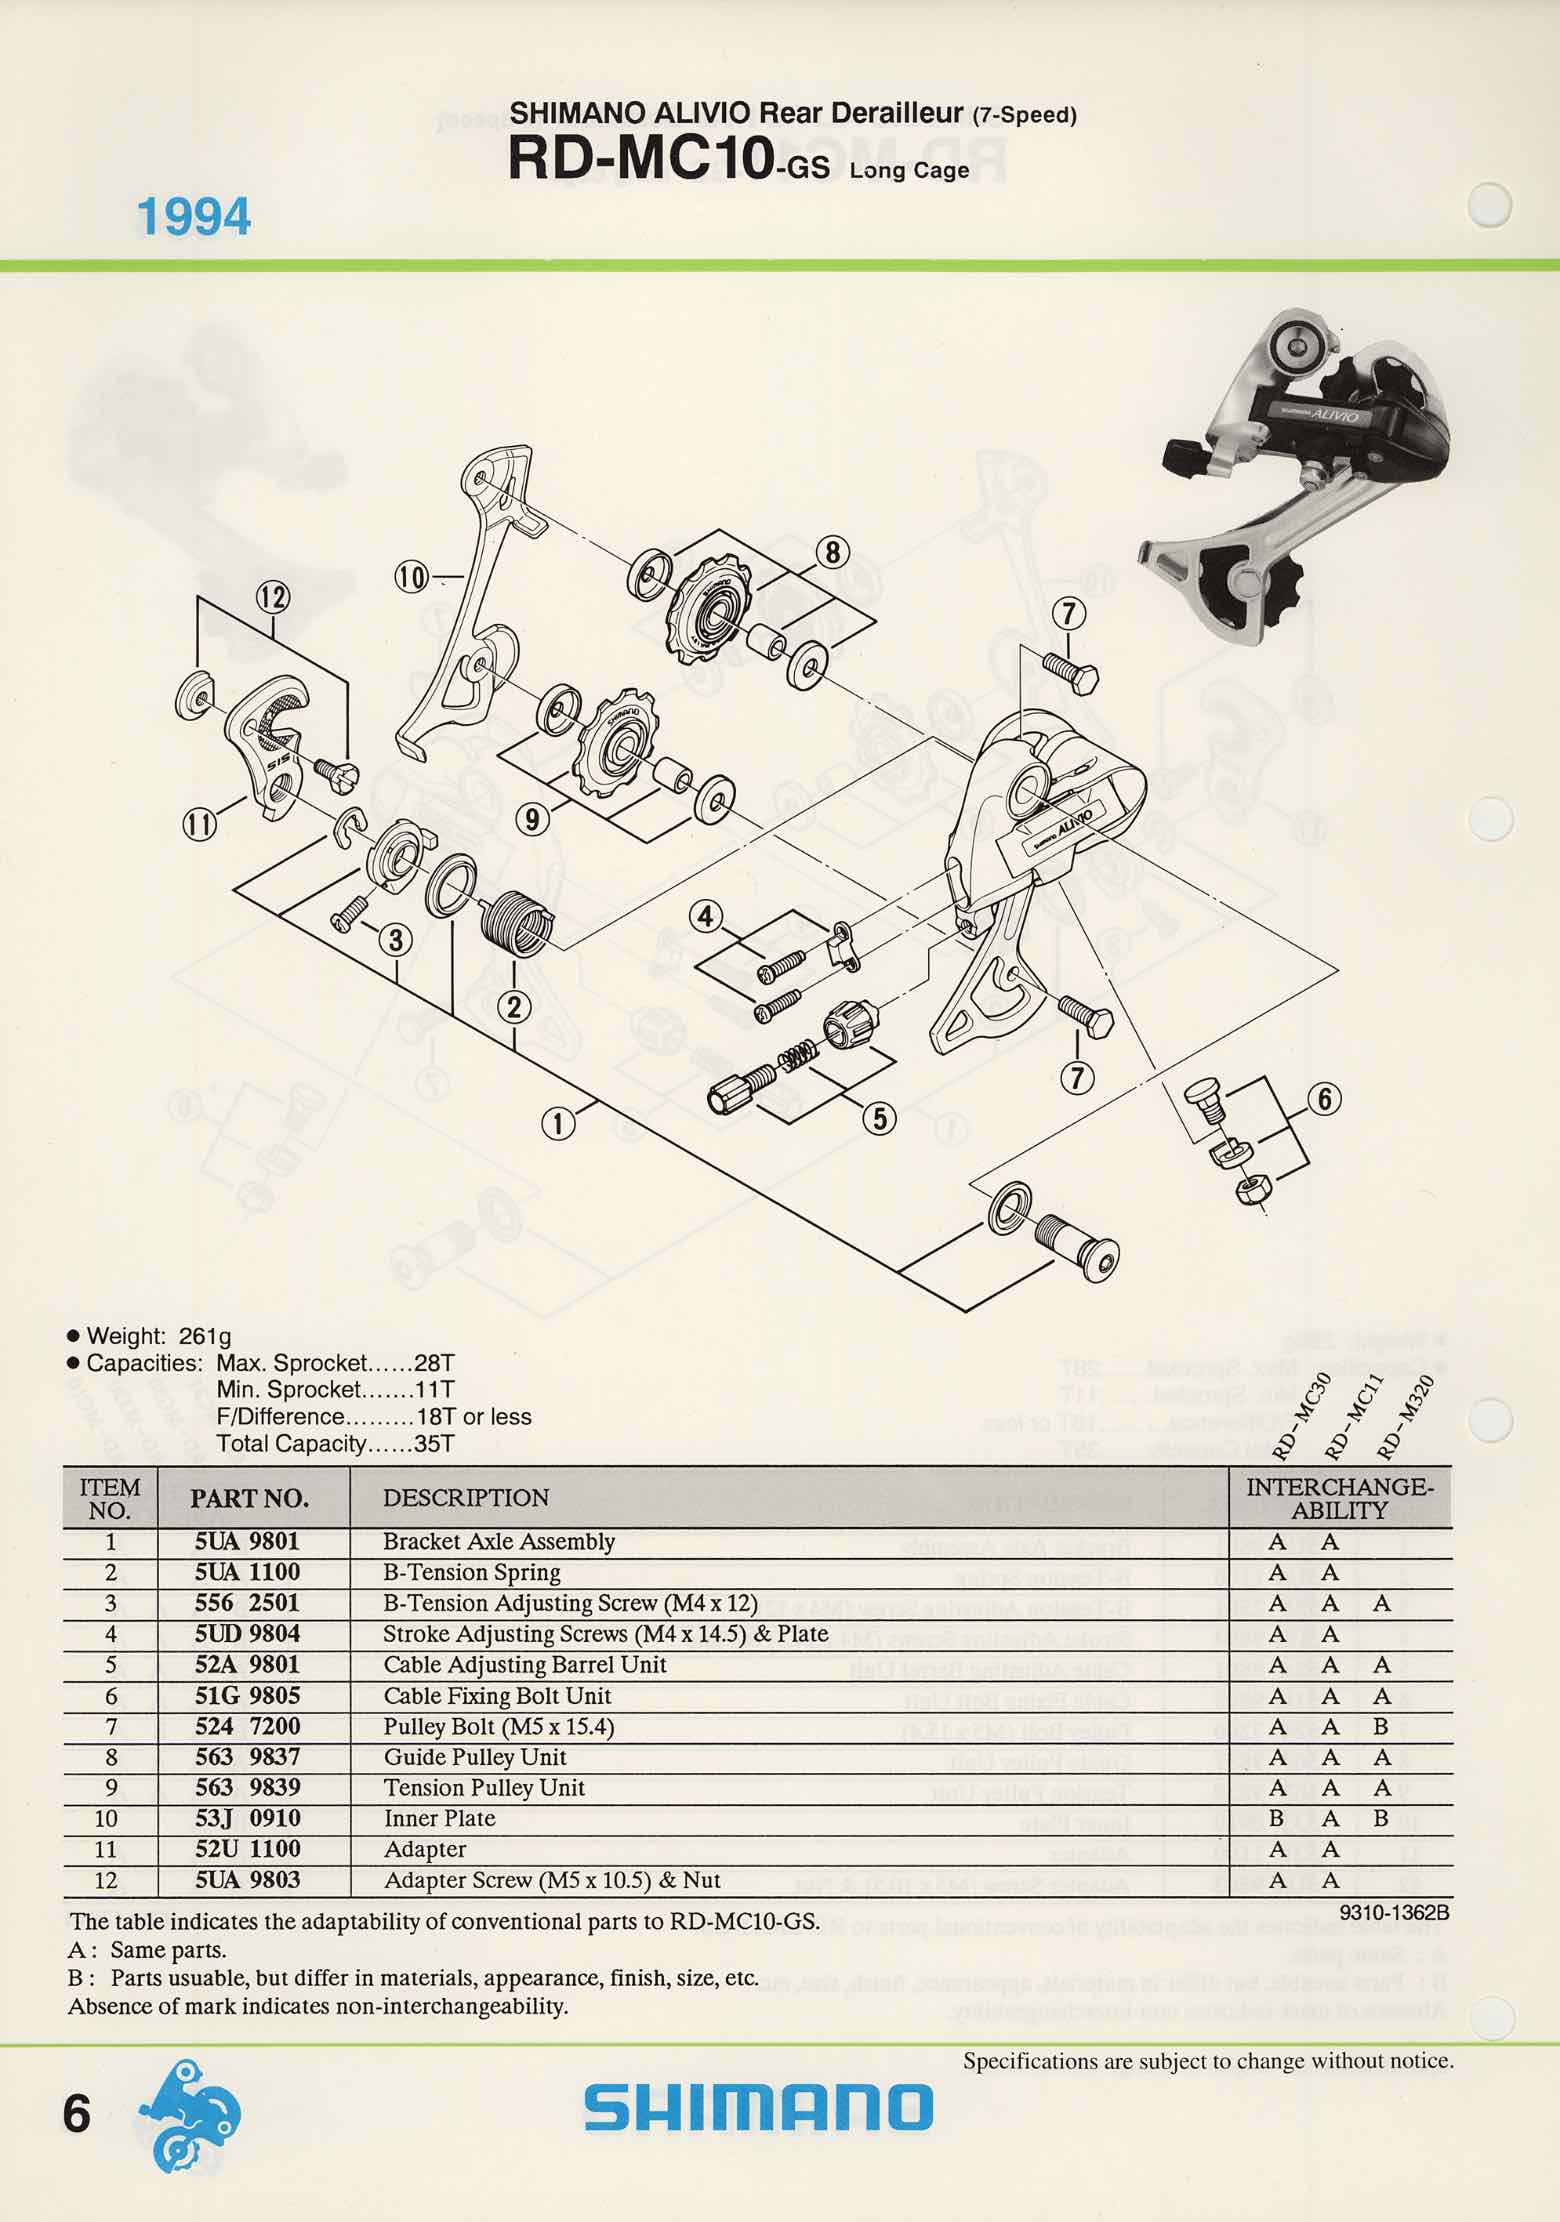 Shimano Spare Parts Catalogue - 1994 to 2004 s5 p6 main image